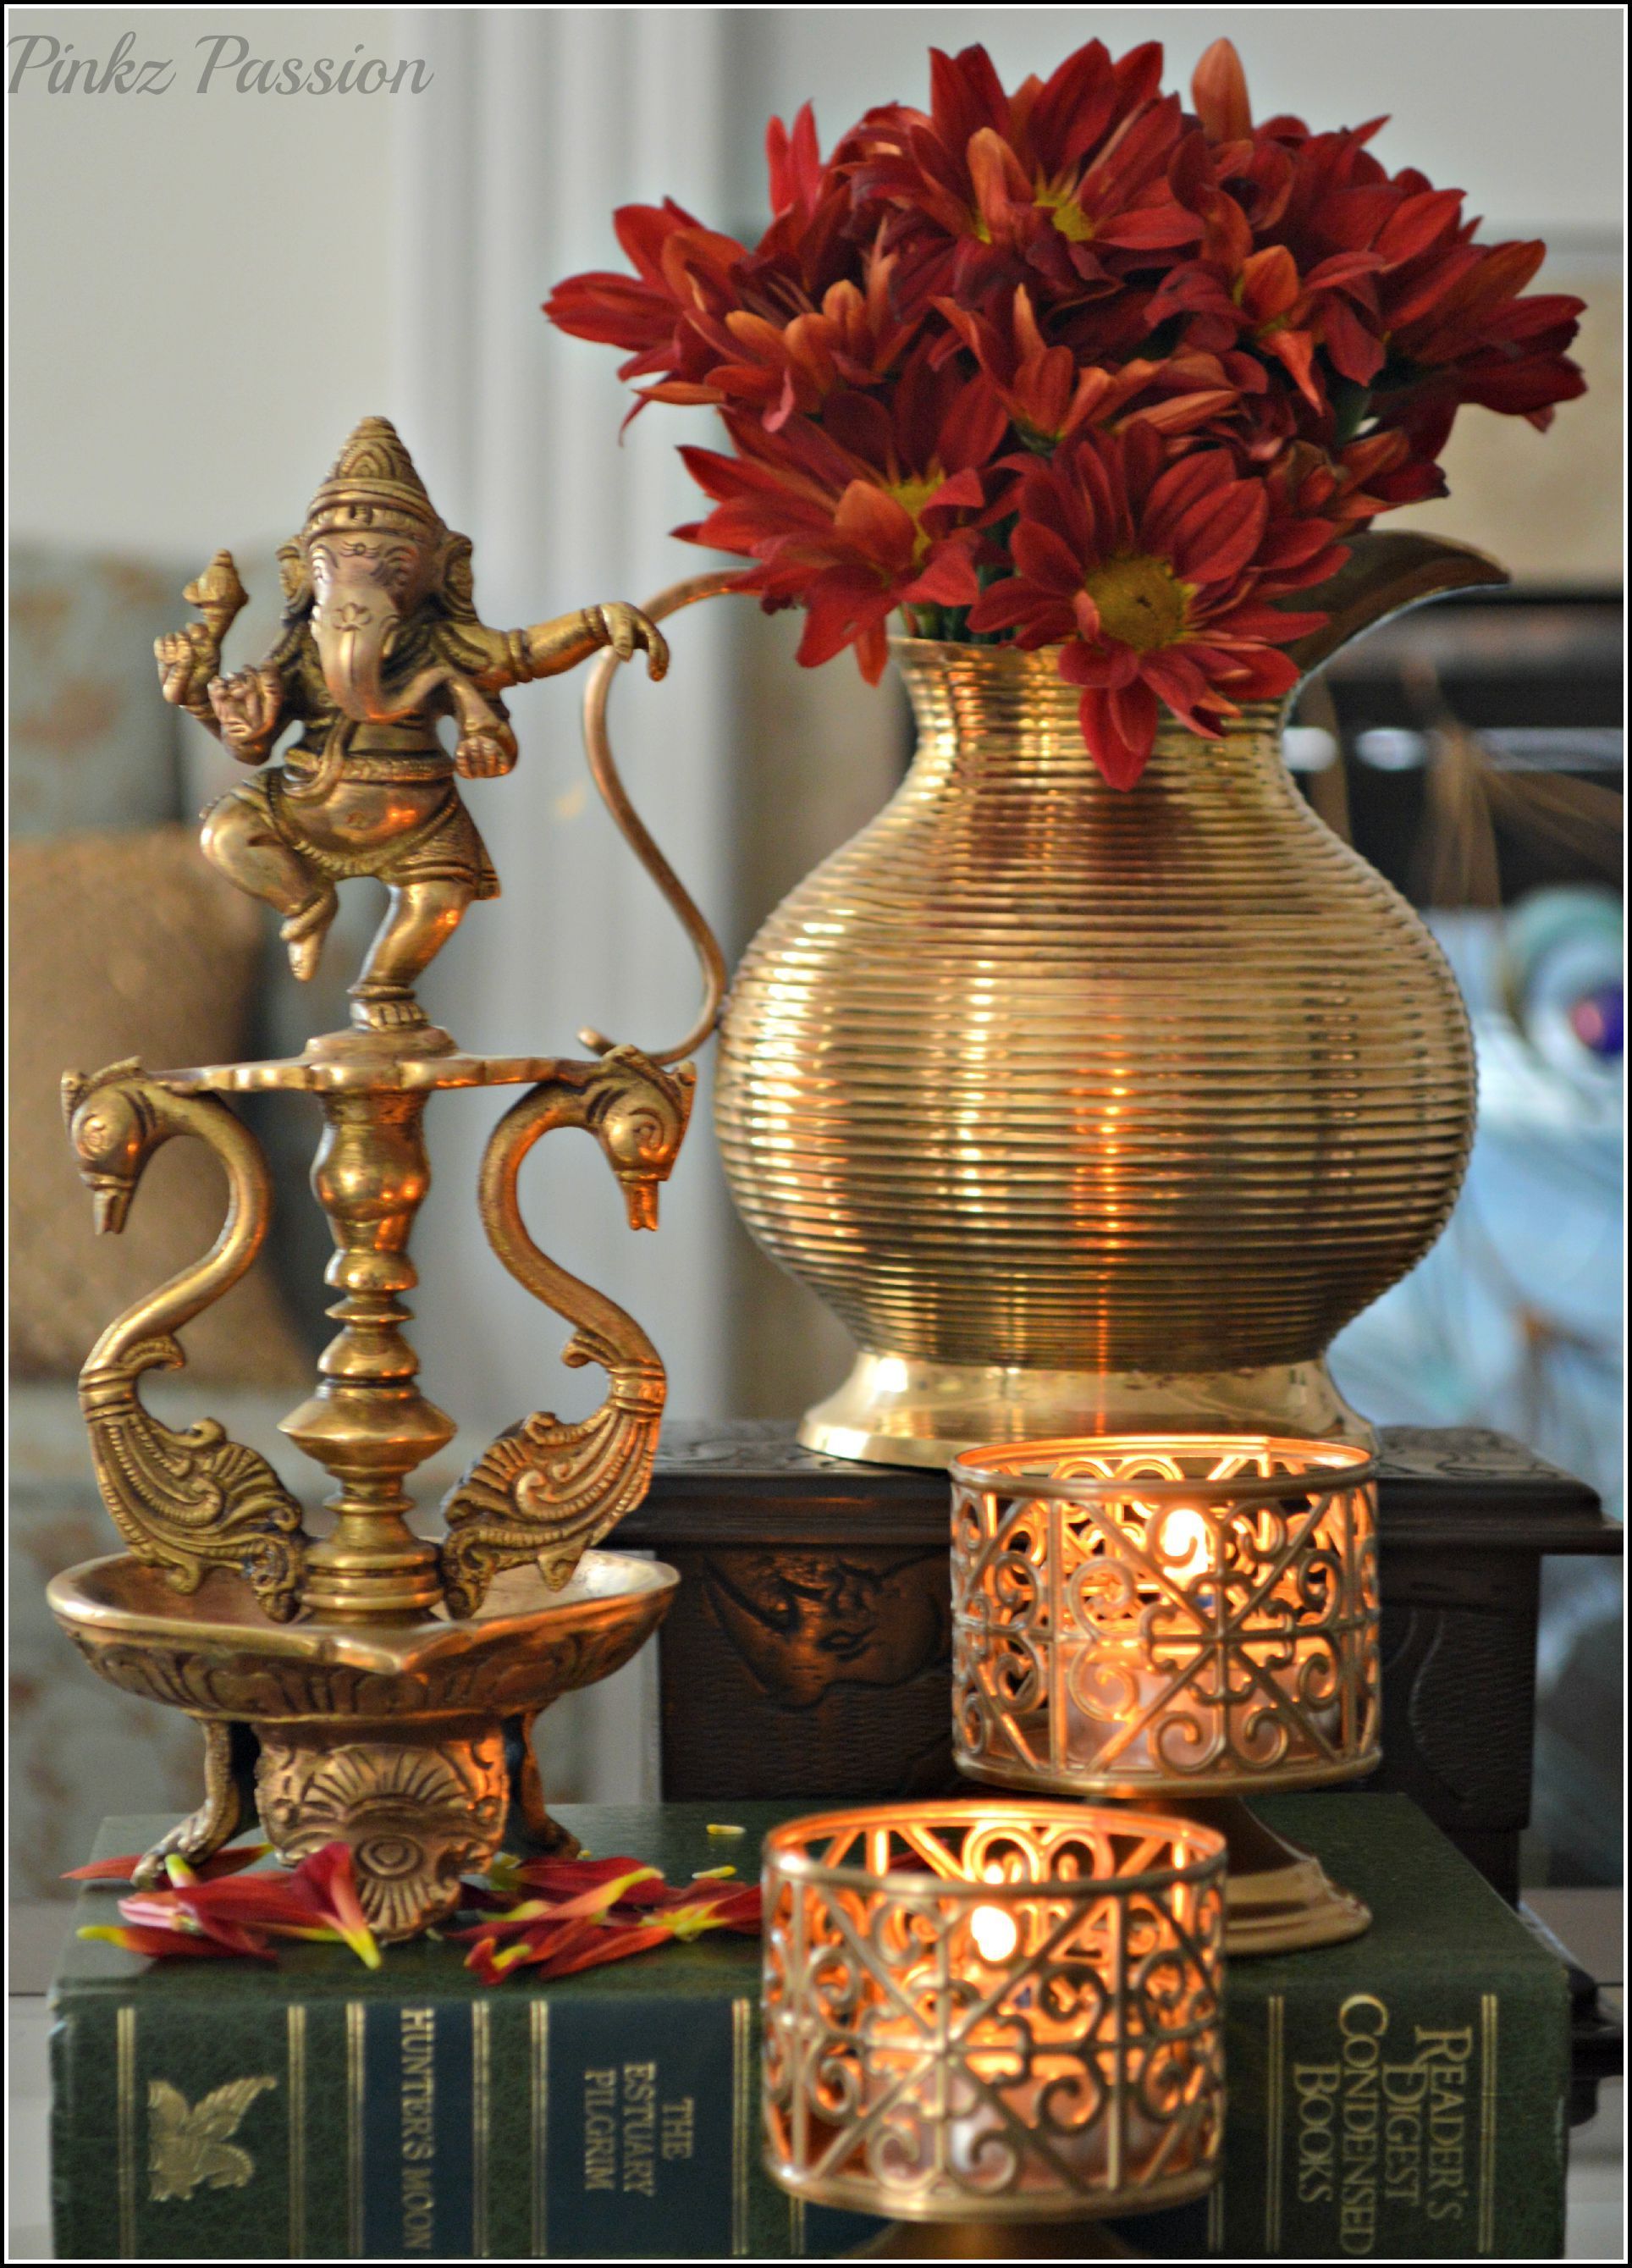 Antique Ganesha, Ethnic Indian Décor, Festive décor, Ganesha collection, Indian Inspired Decor